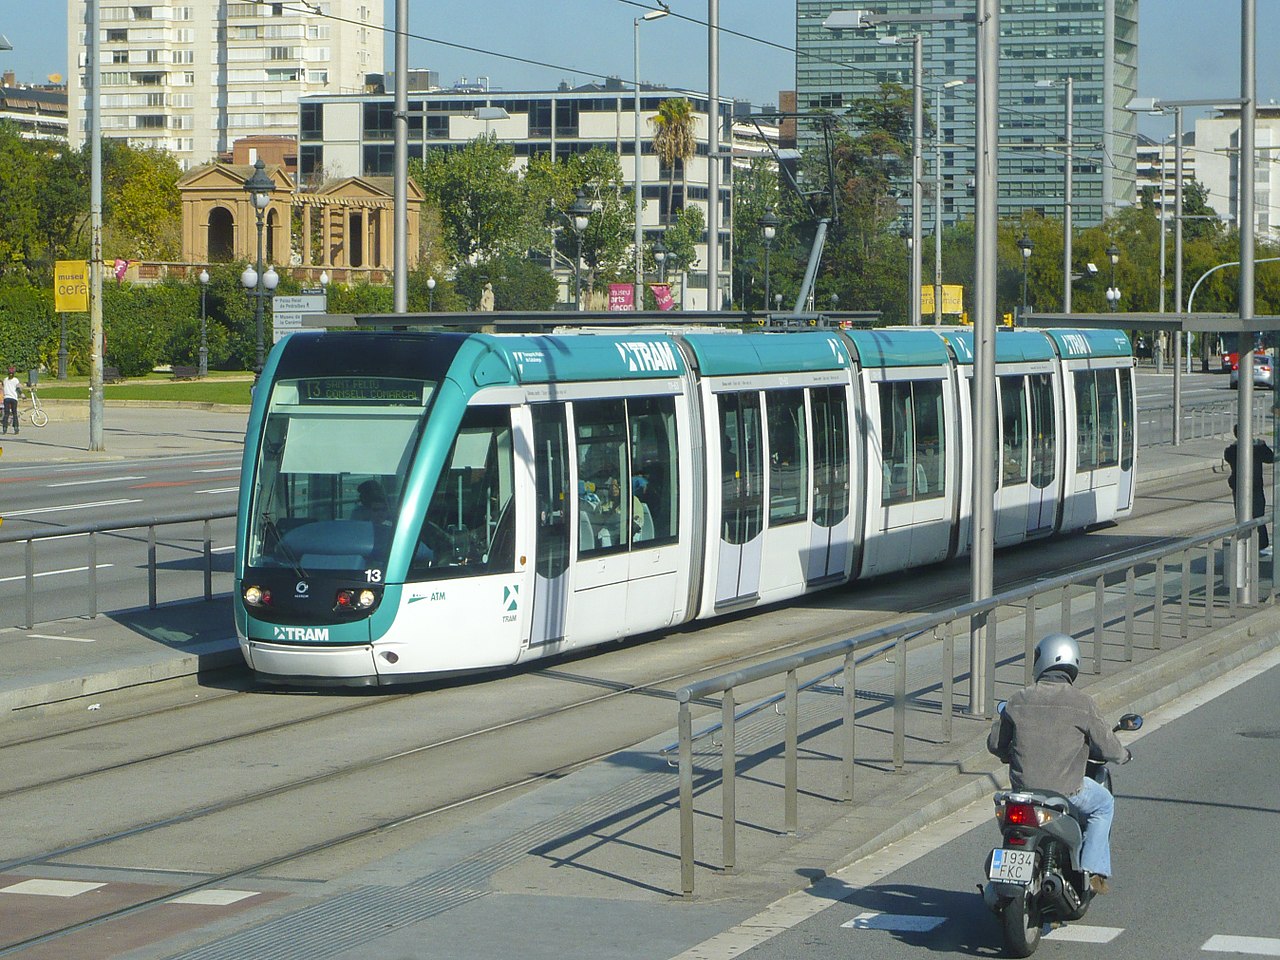 Barcelona Modern tram (Trambaix)